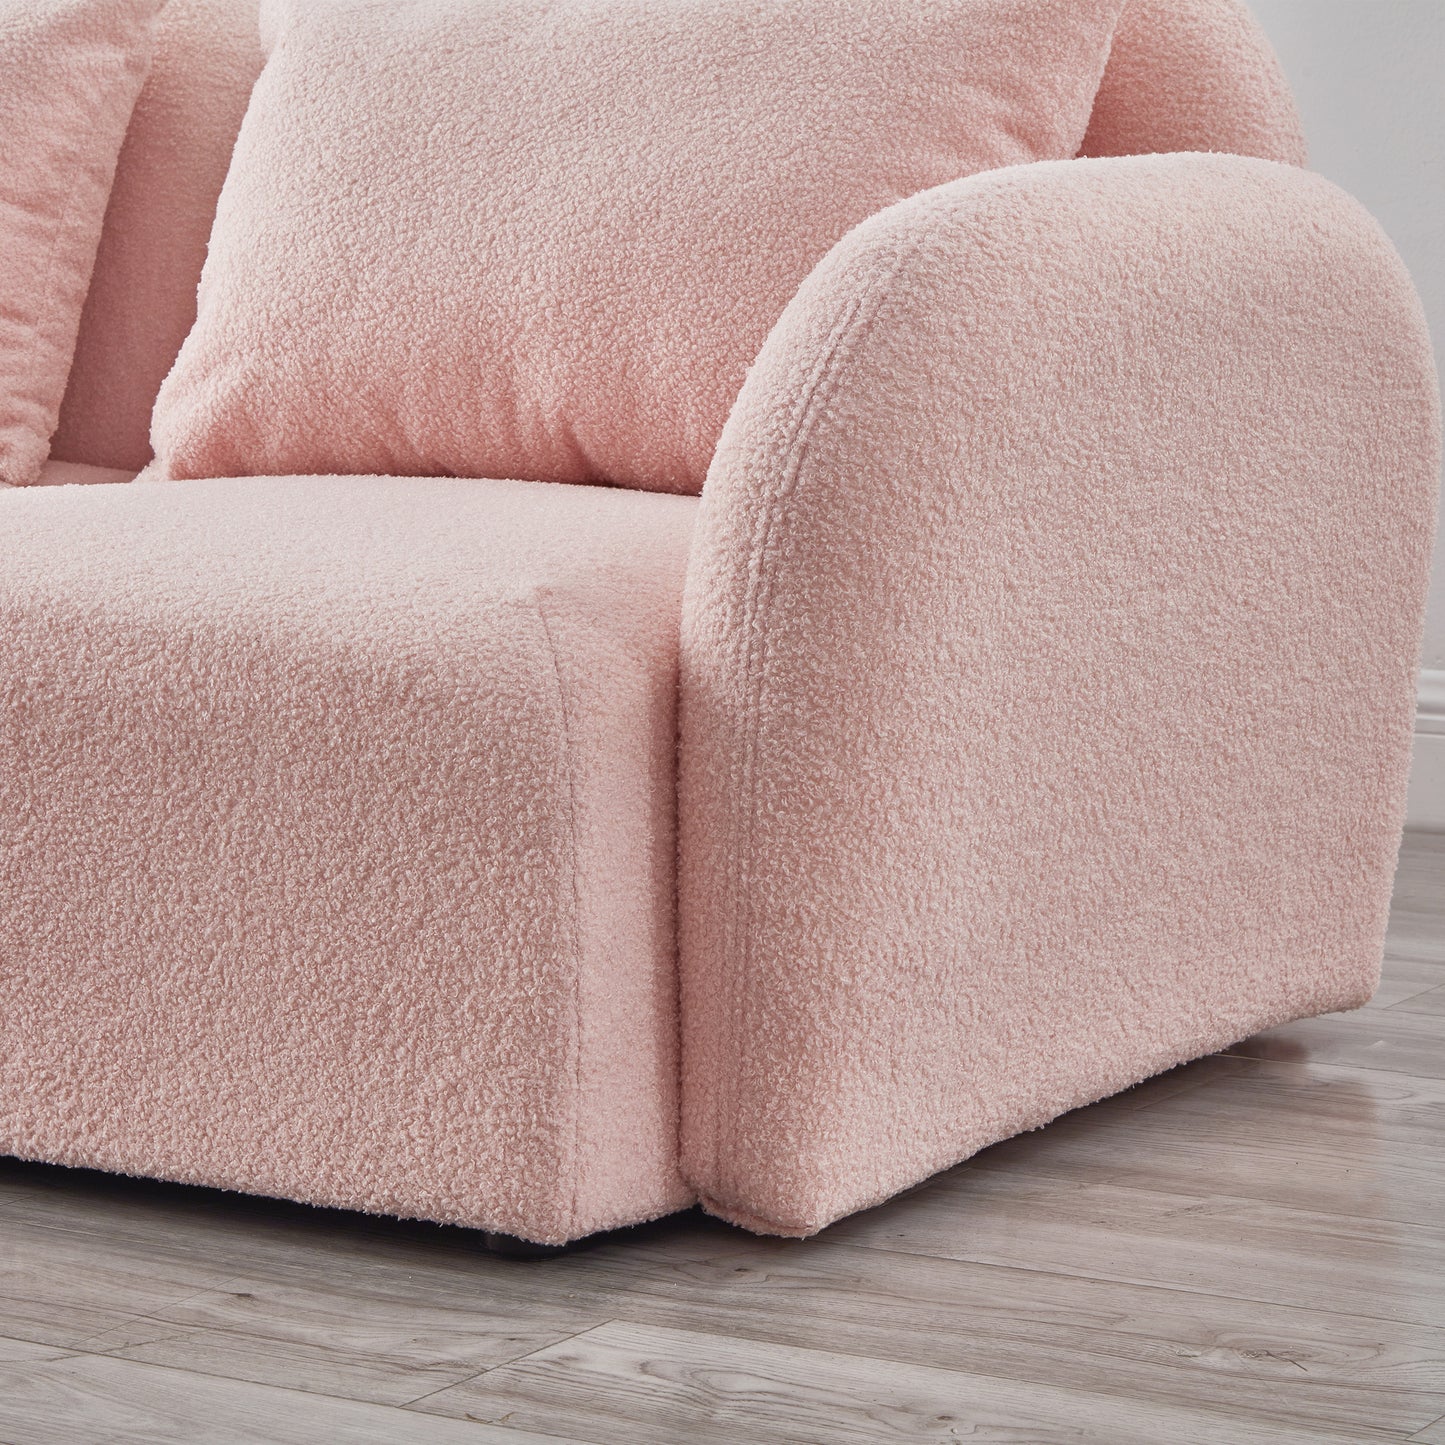 Living Room Furniture Sofa Teddy Fabric Pink